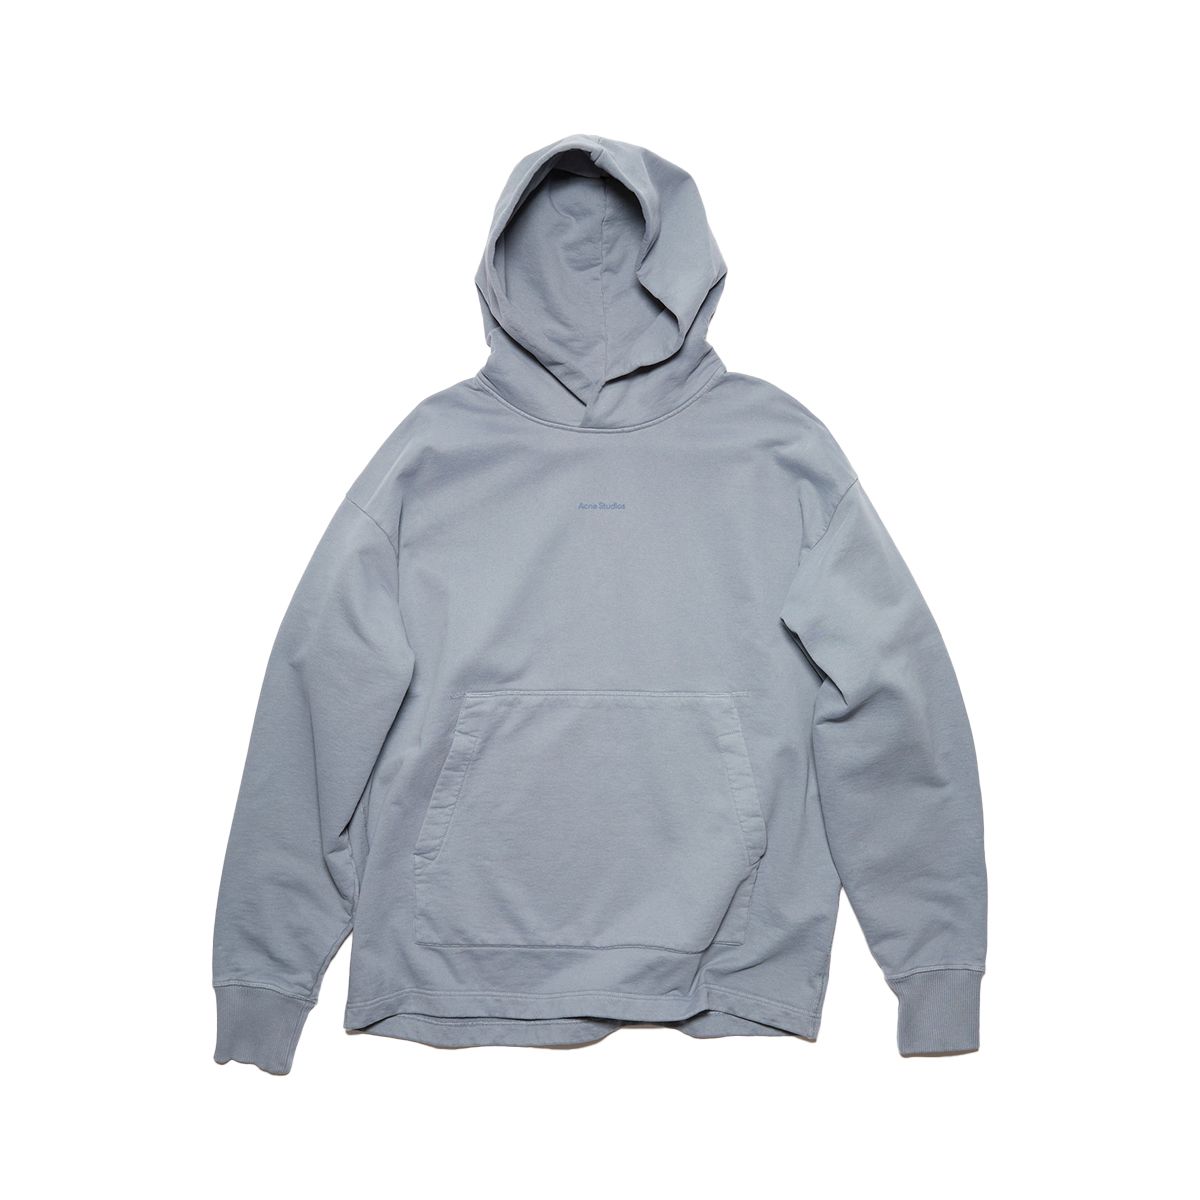 Steel Grey Hooded Sweatshirt